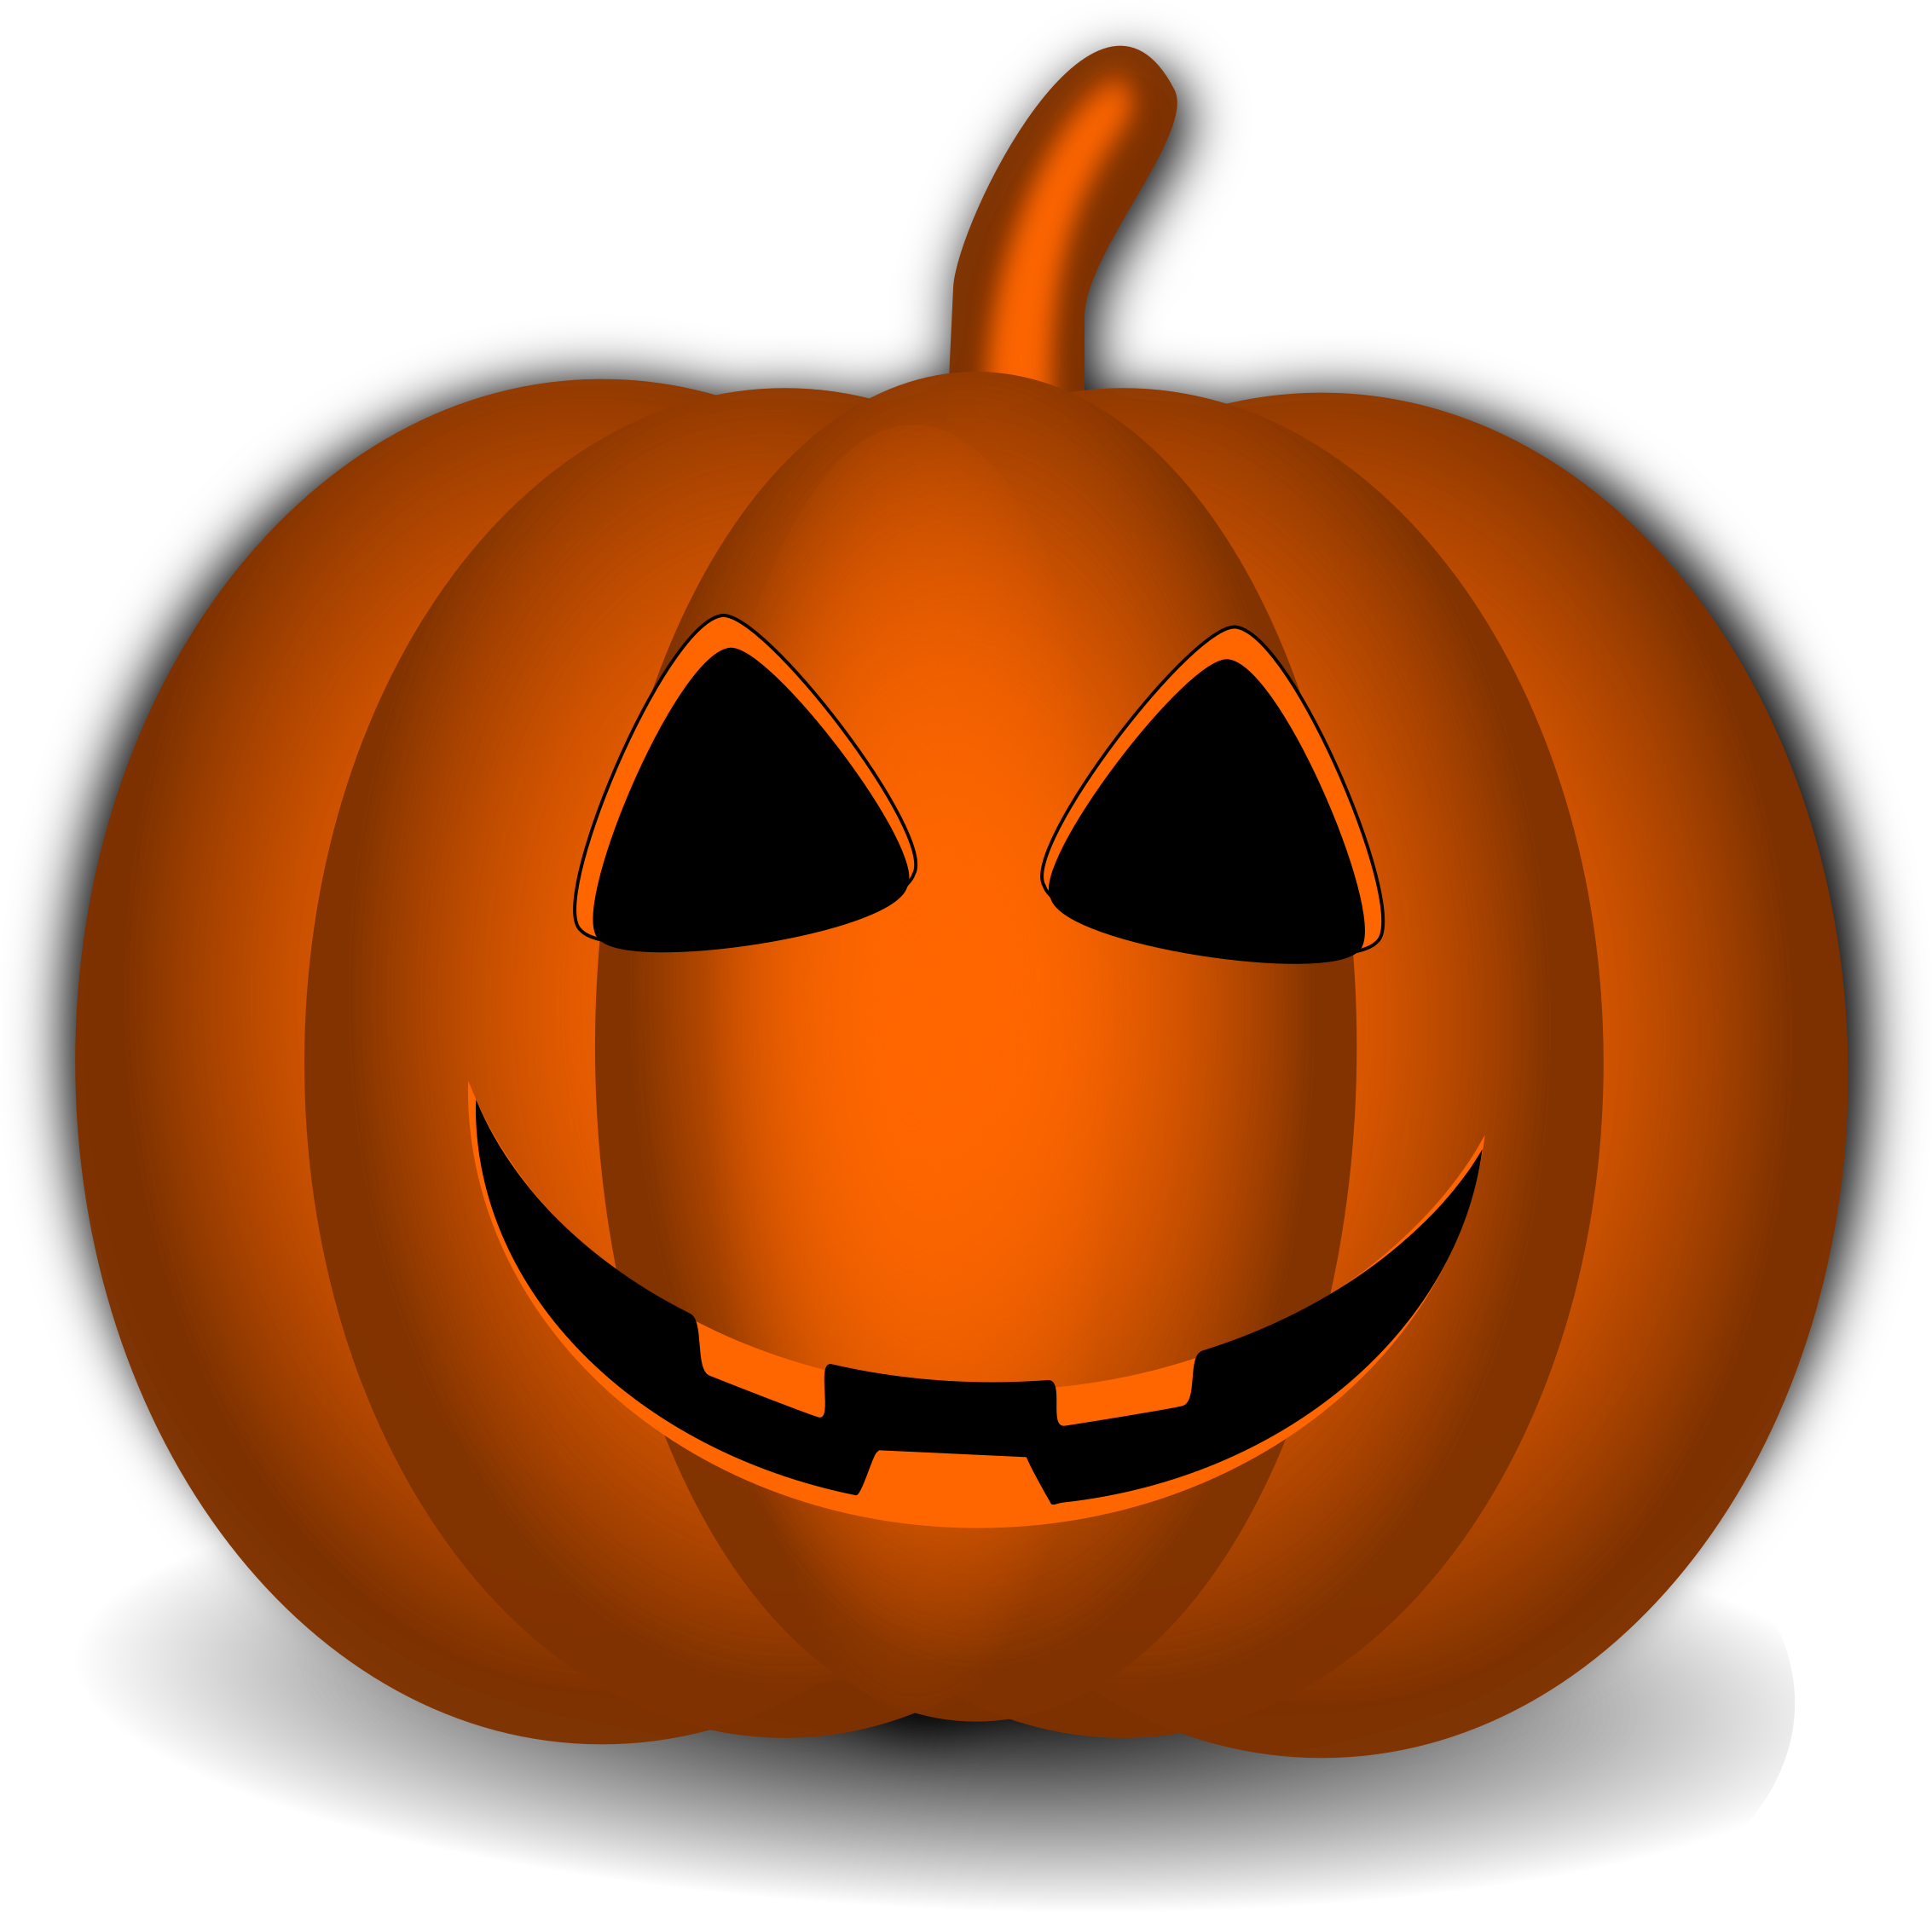 Big Image - Happy Face Halloween Pumpkin (2265x2400)